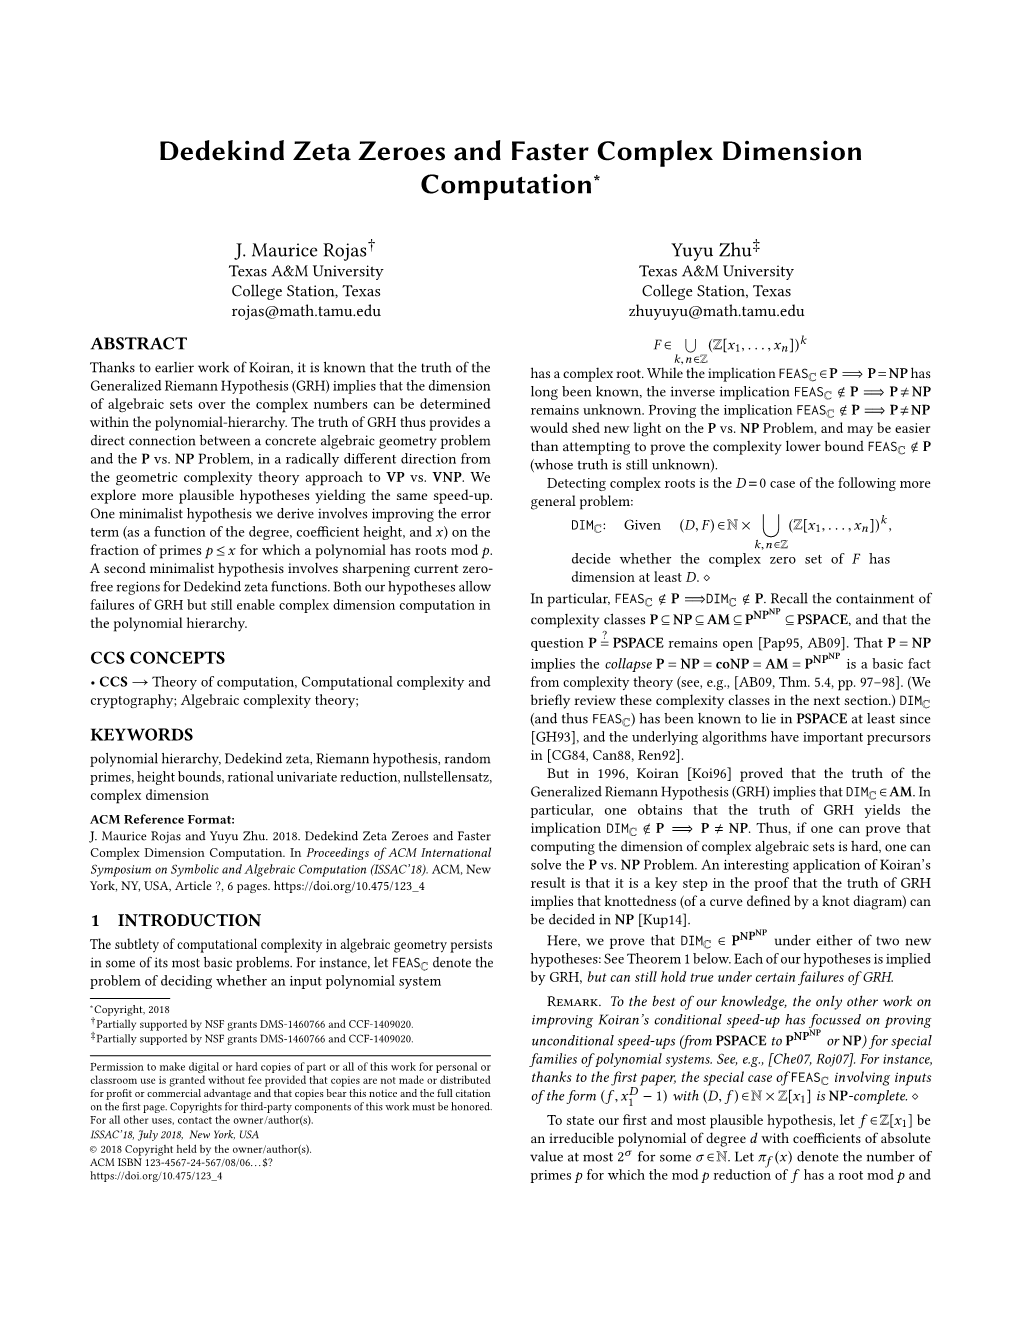 Dedekind Zeta Zeroes and Faster Complex Dimension Computation∗